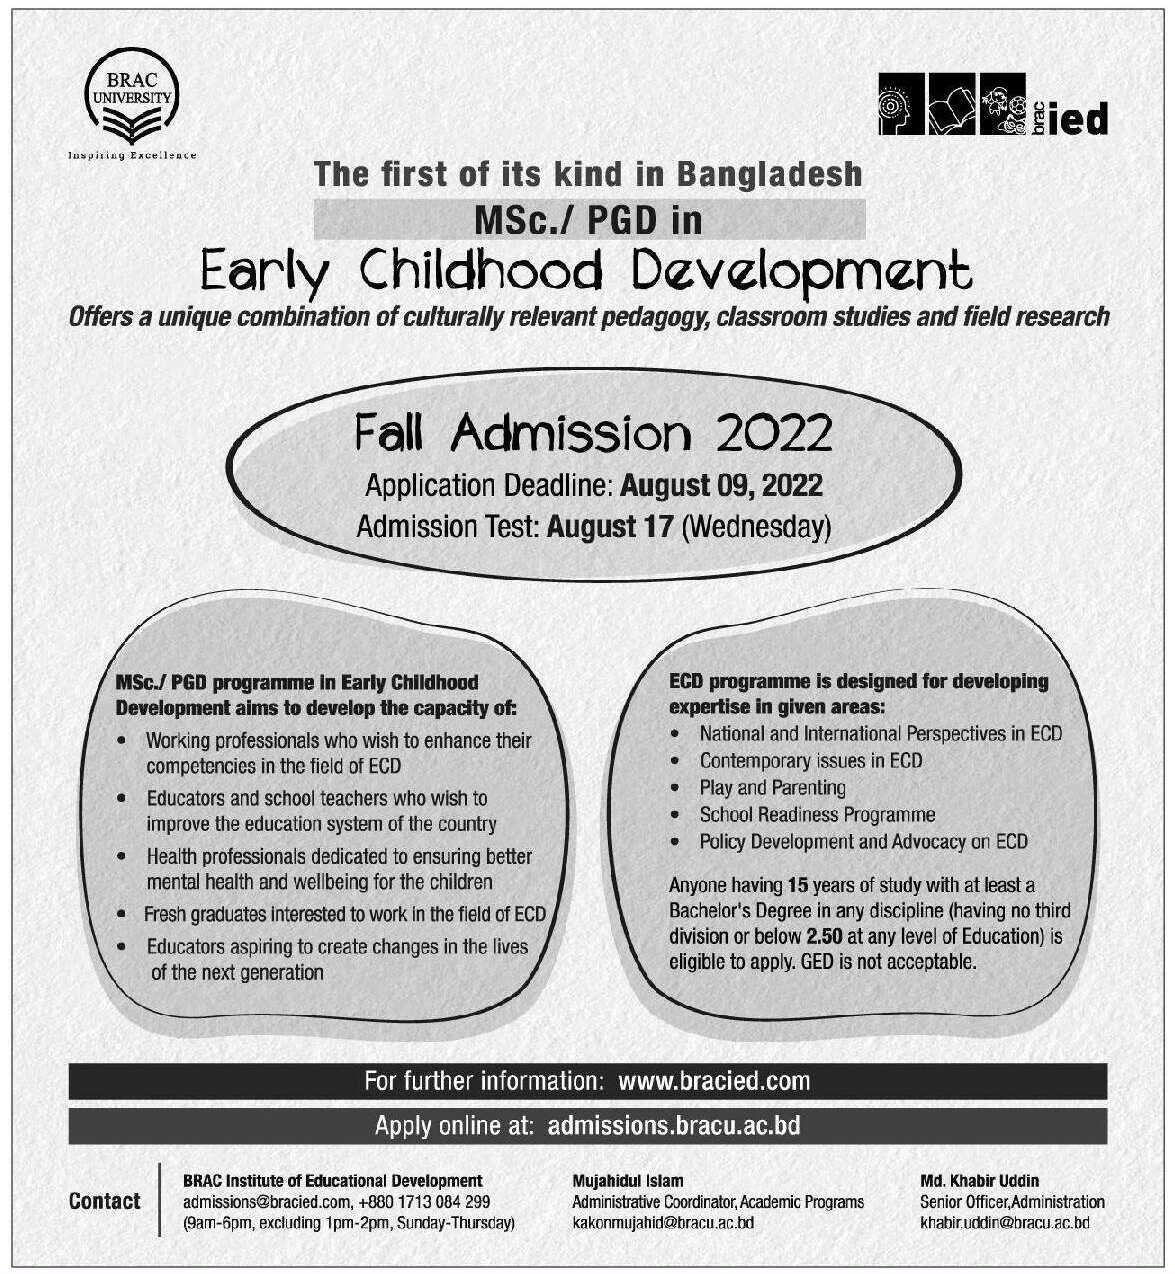 Early Childhood Development Education | Professional Development Courses for Early Childhood Educators.